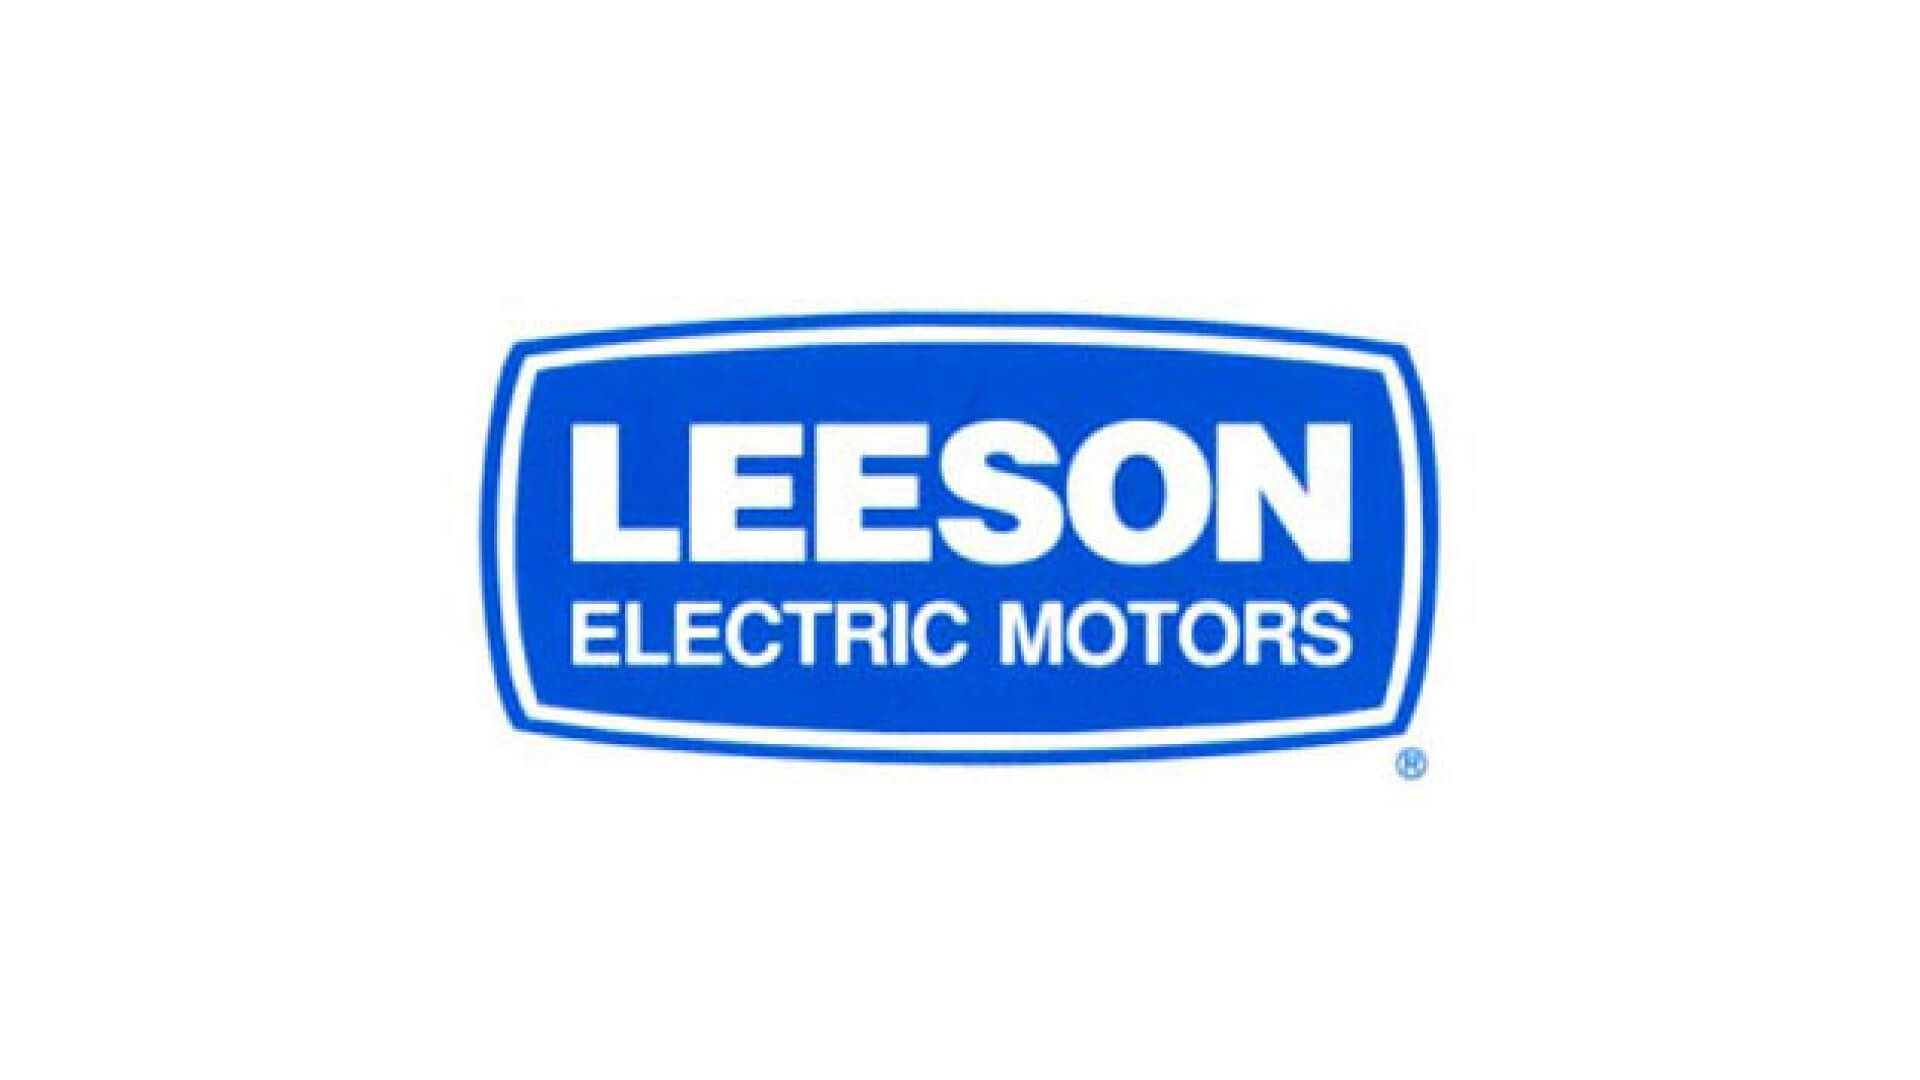 Leeson Electric Motors logo in color